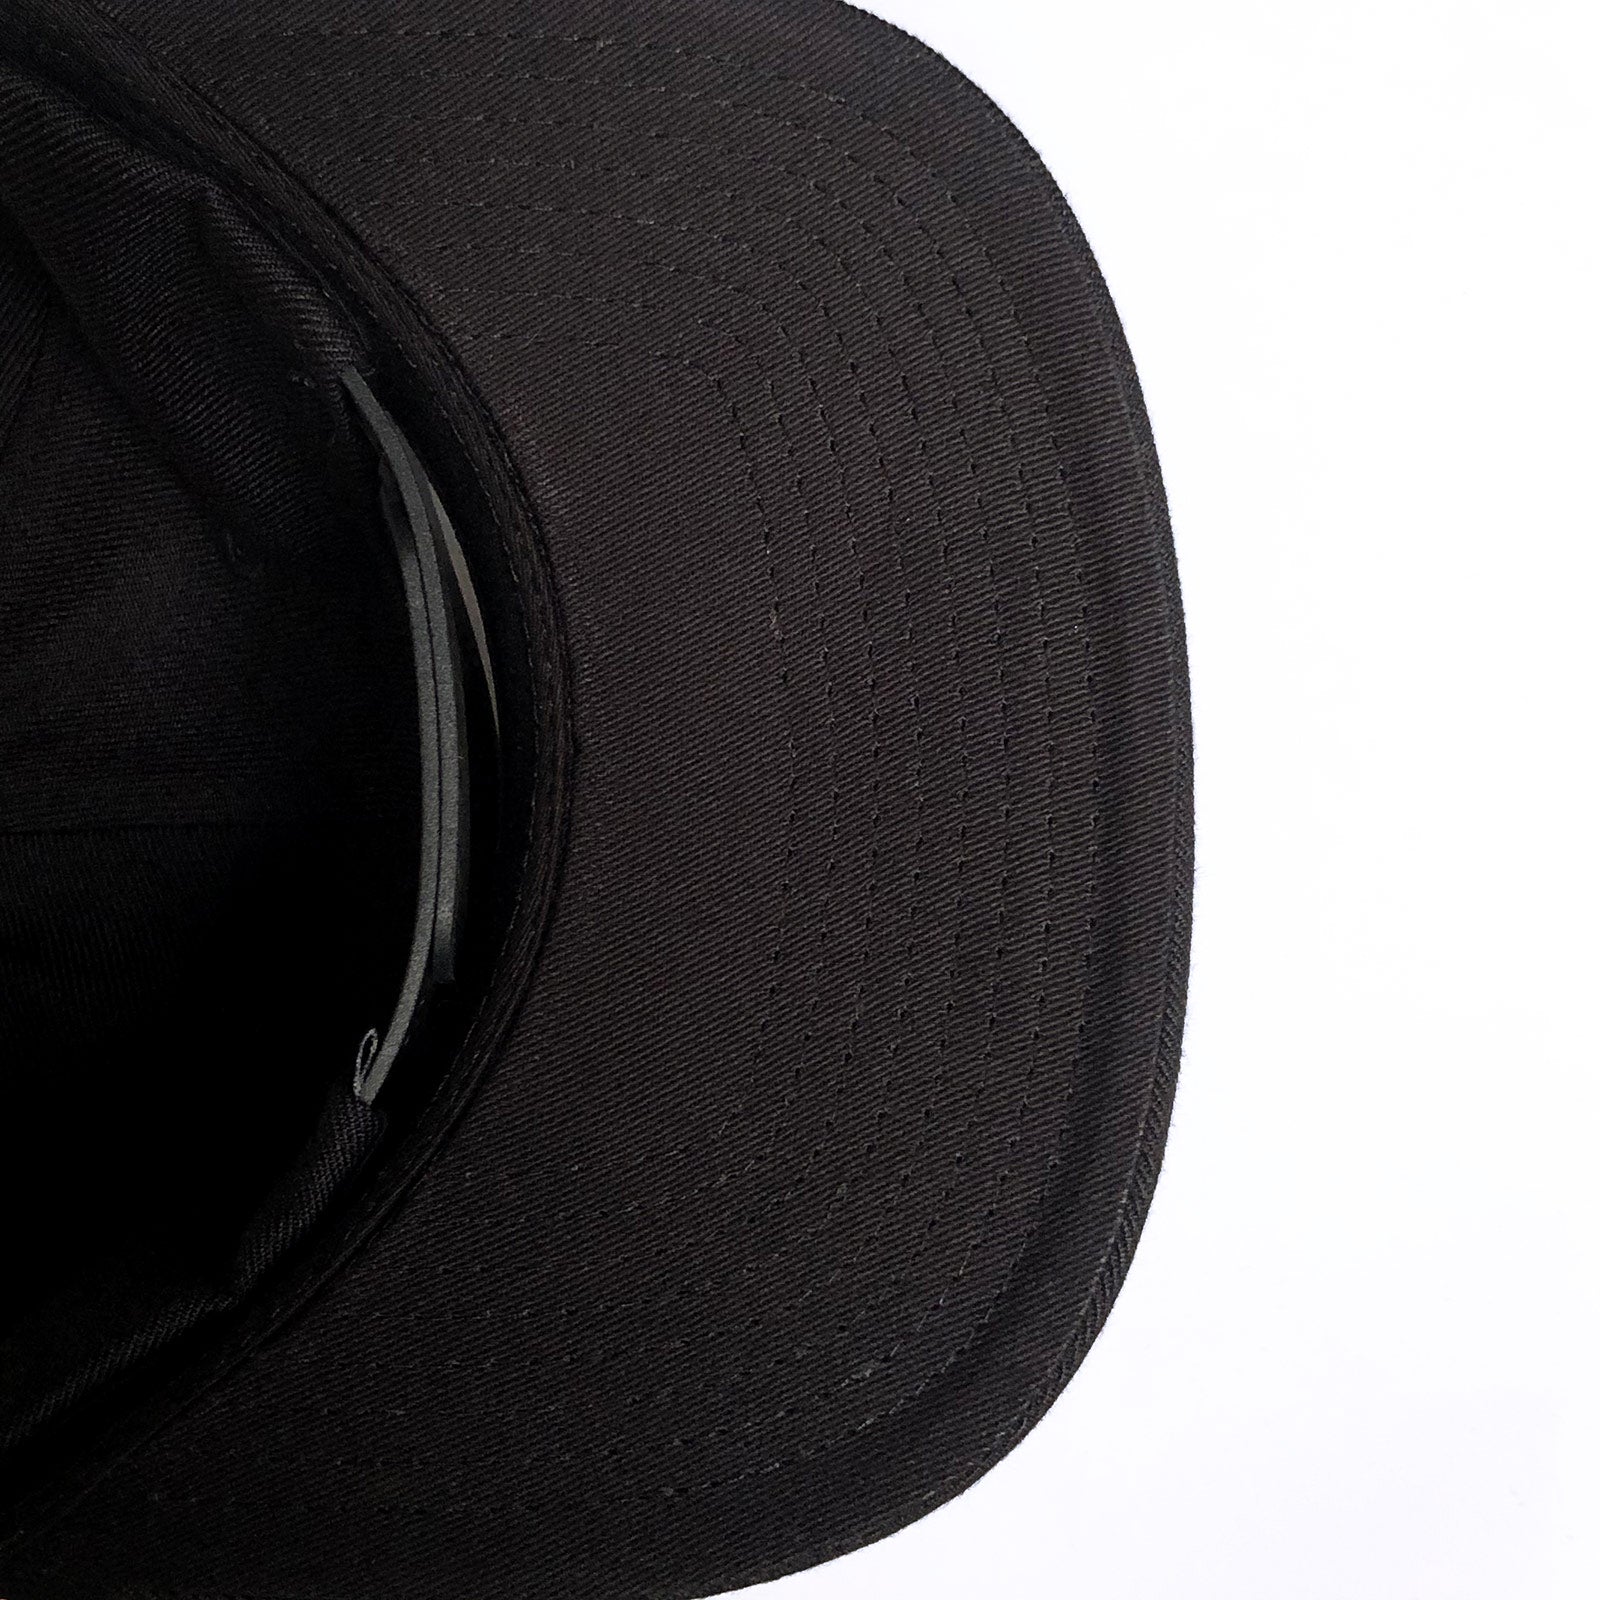 The black underside of the bill on a black cap.